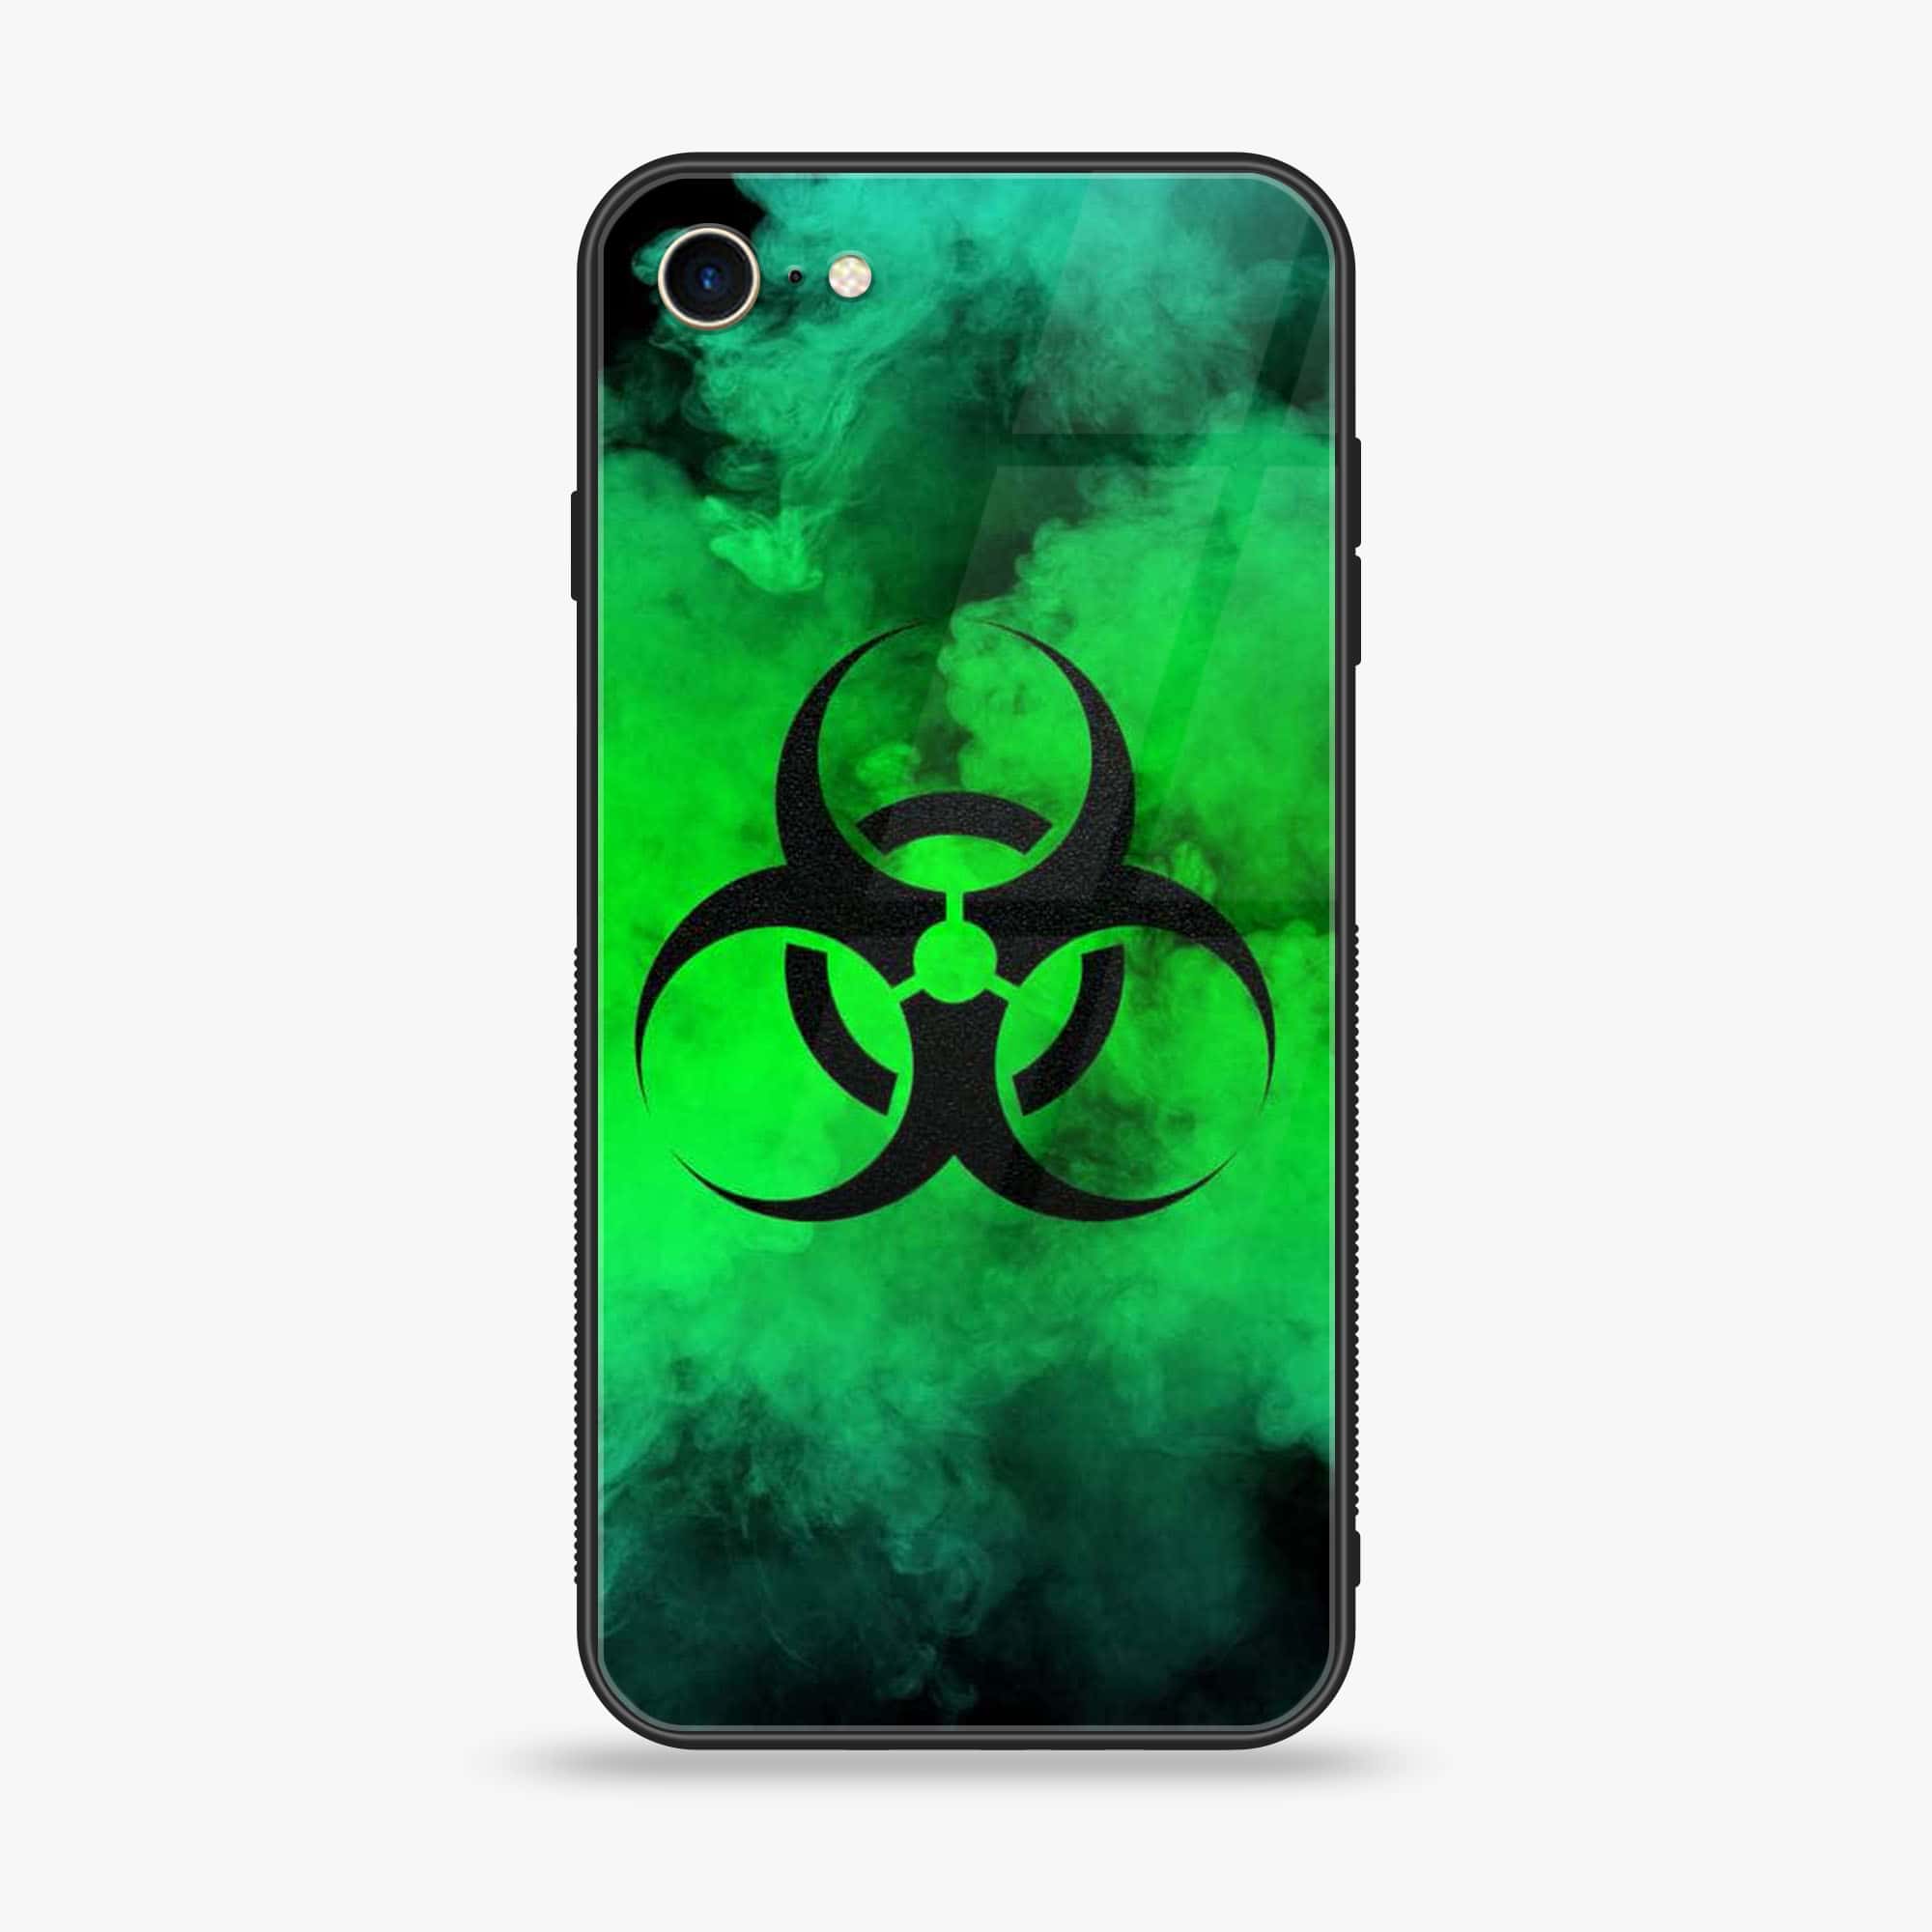 IPhone SE 2020 - Biohazard Sign Series - Premium Printed Glass soft Bumper shock Proof Case